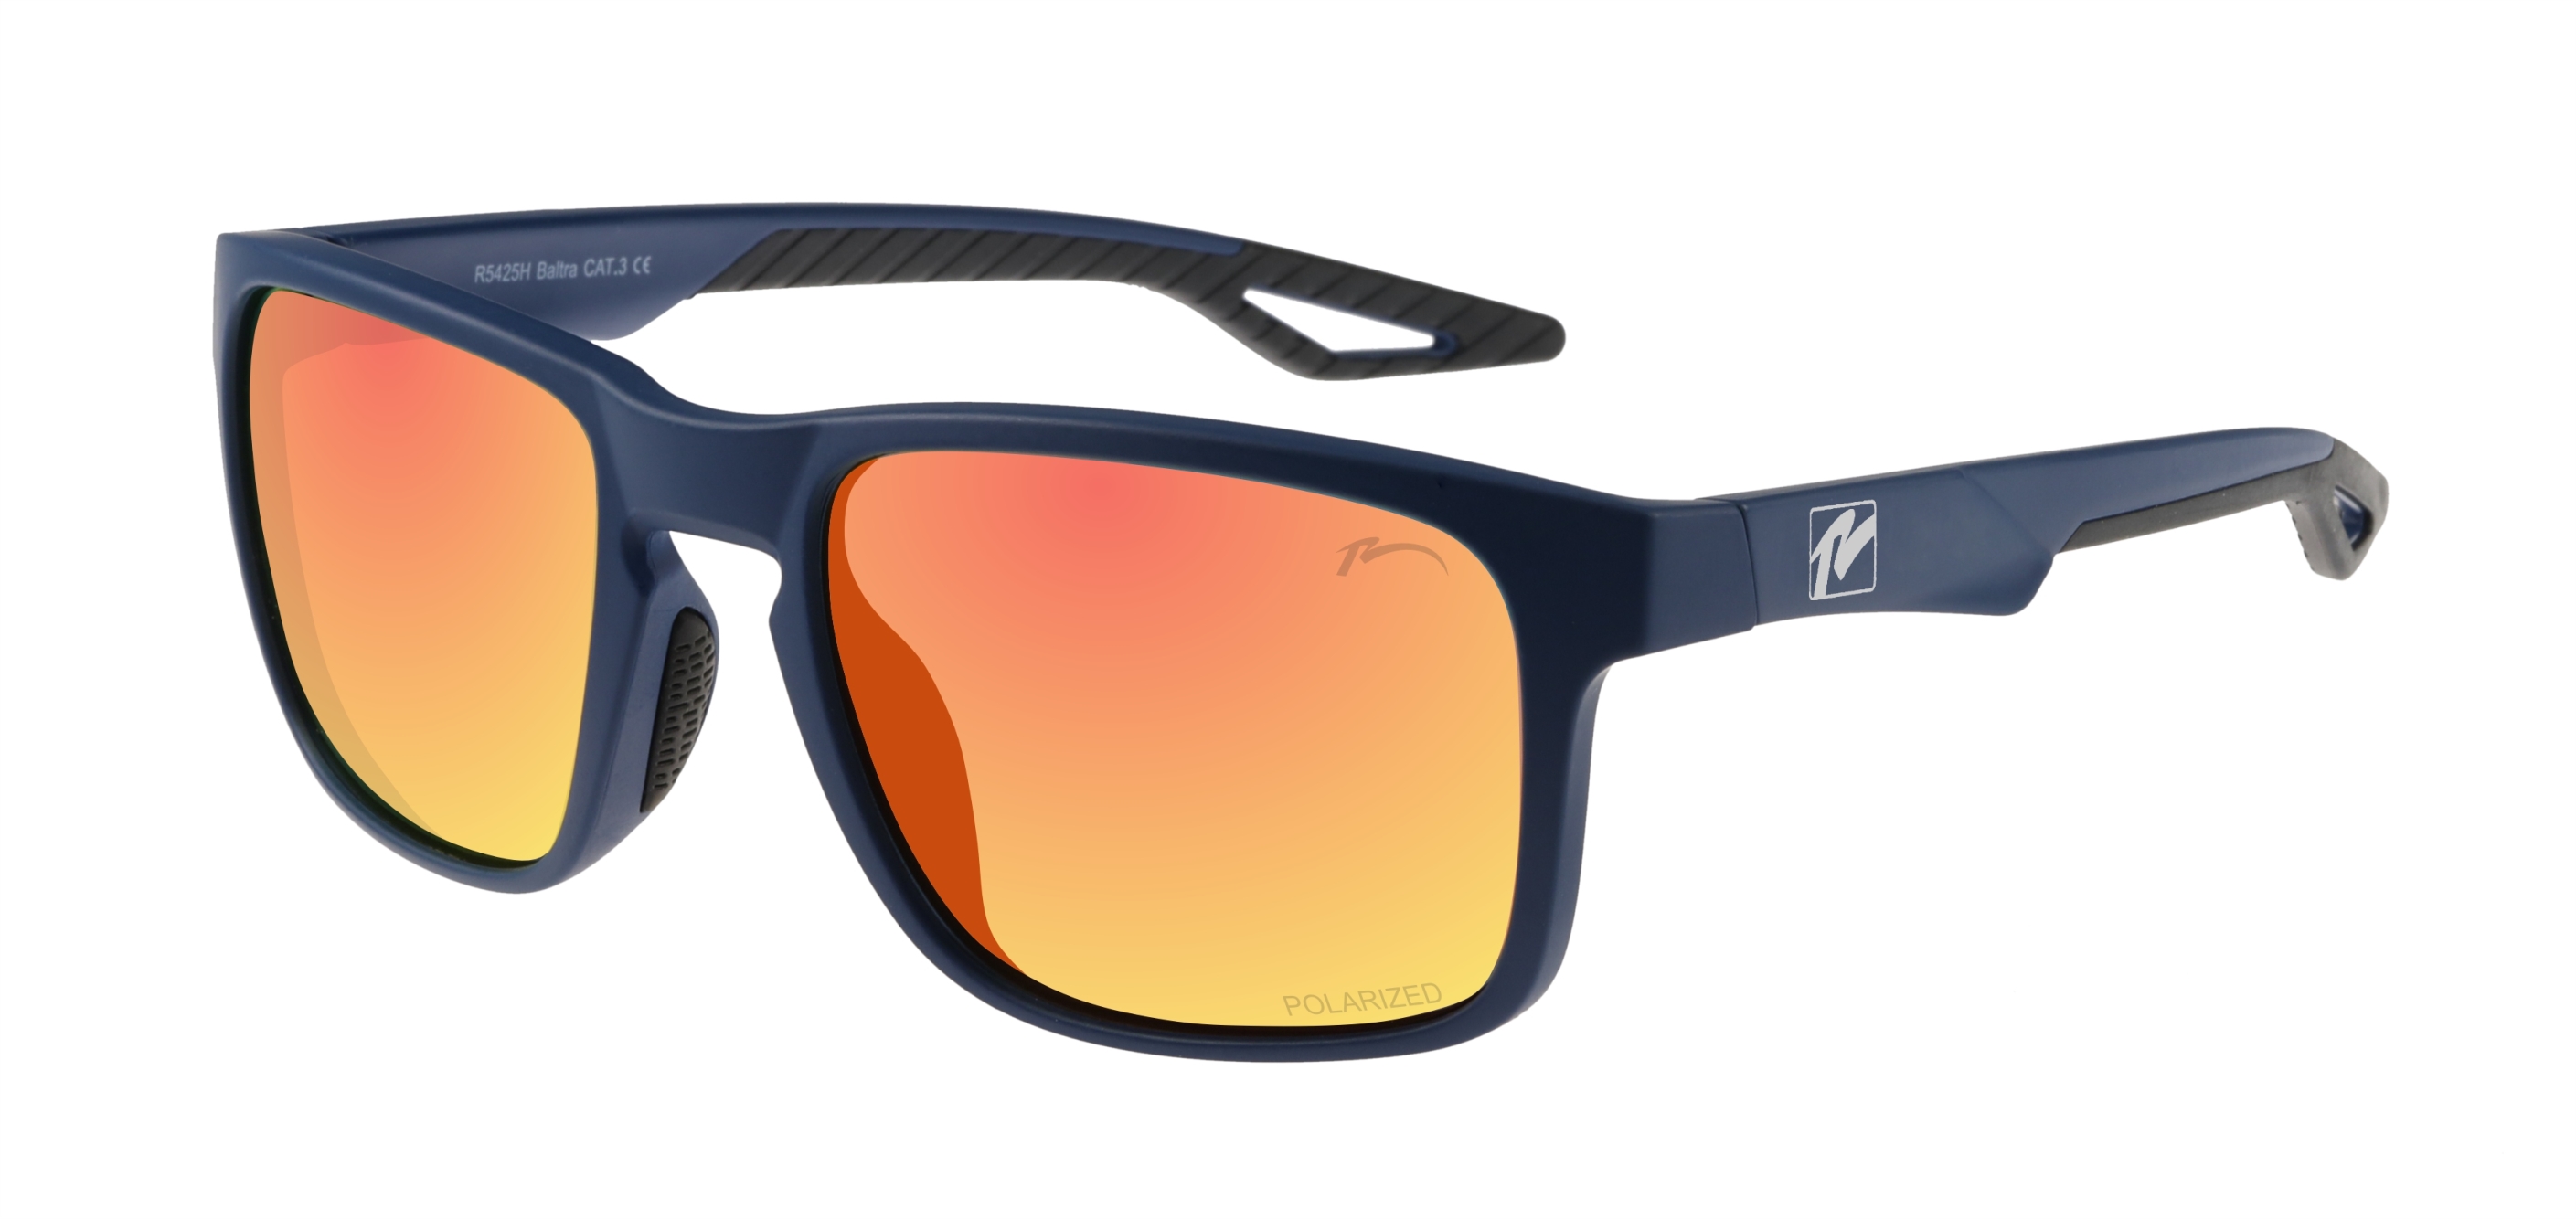 Polarized sport sunglasses  Baltra Relax R5425H